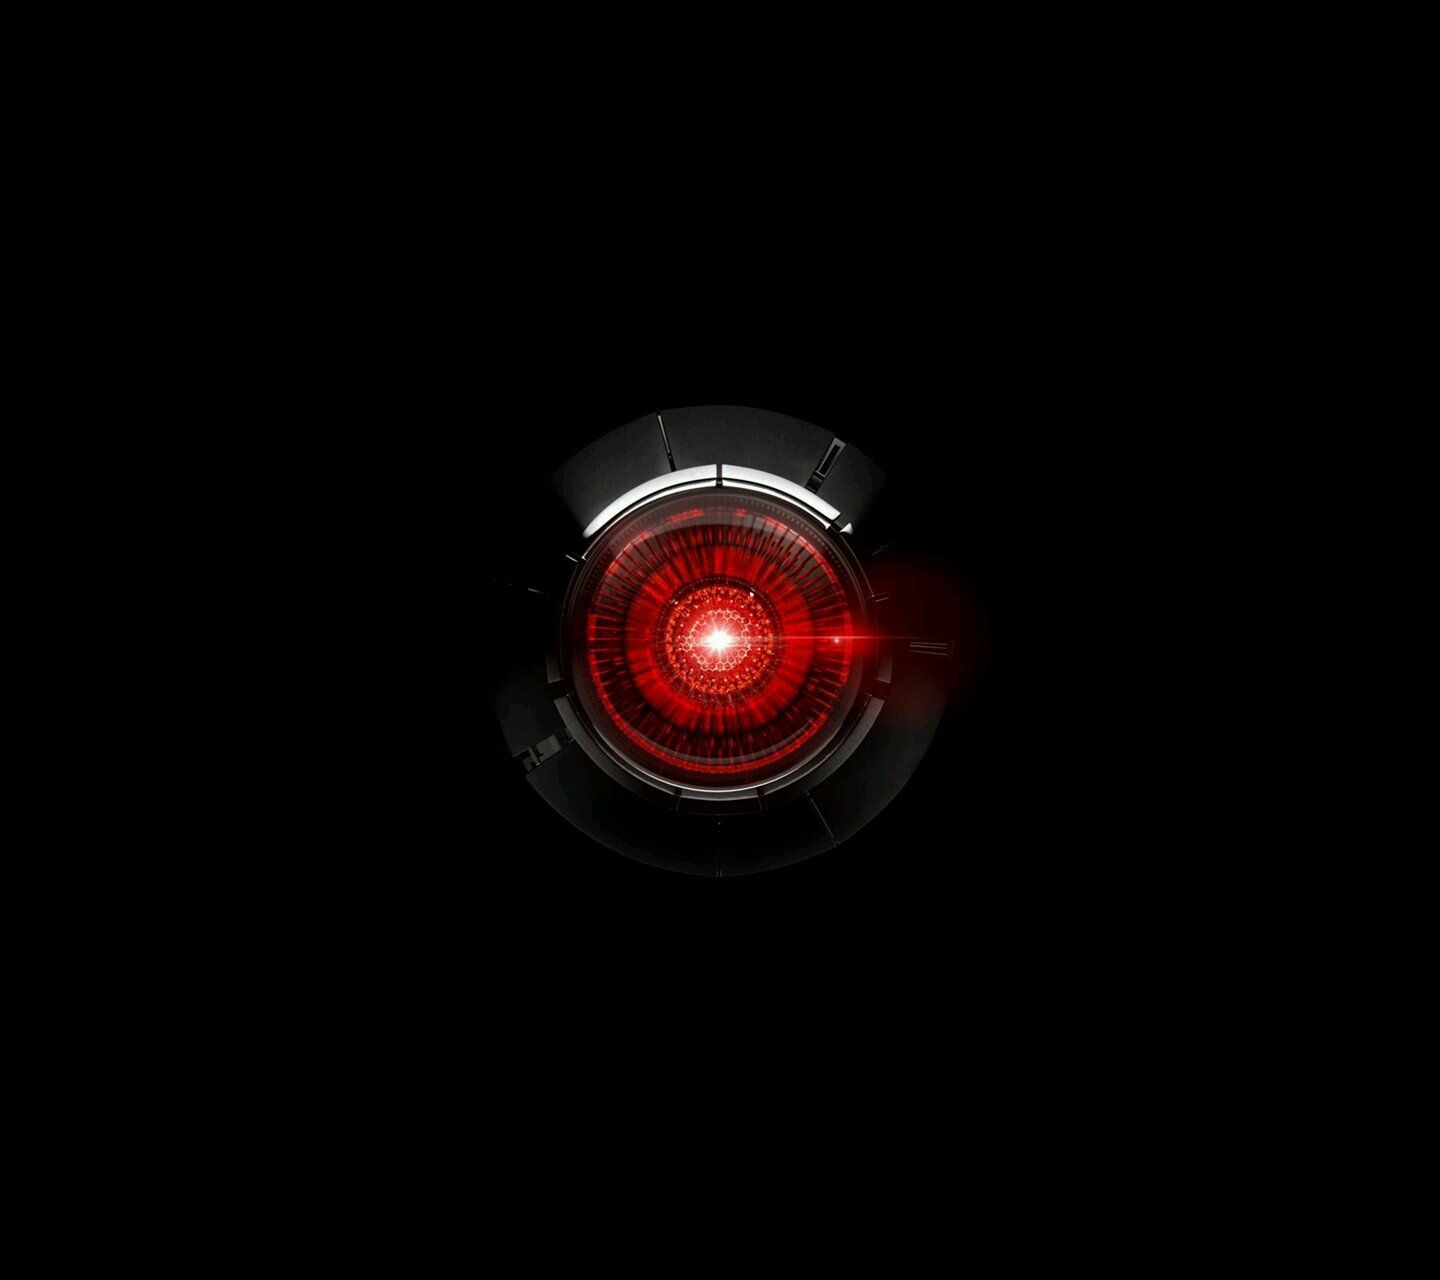 mr handy new red robot eye at Fallout 4 Nexus and community. Red robot, Robot eyes, Mr handy